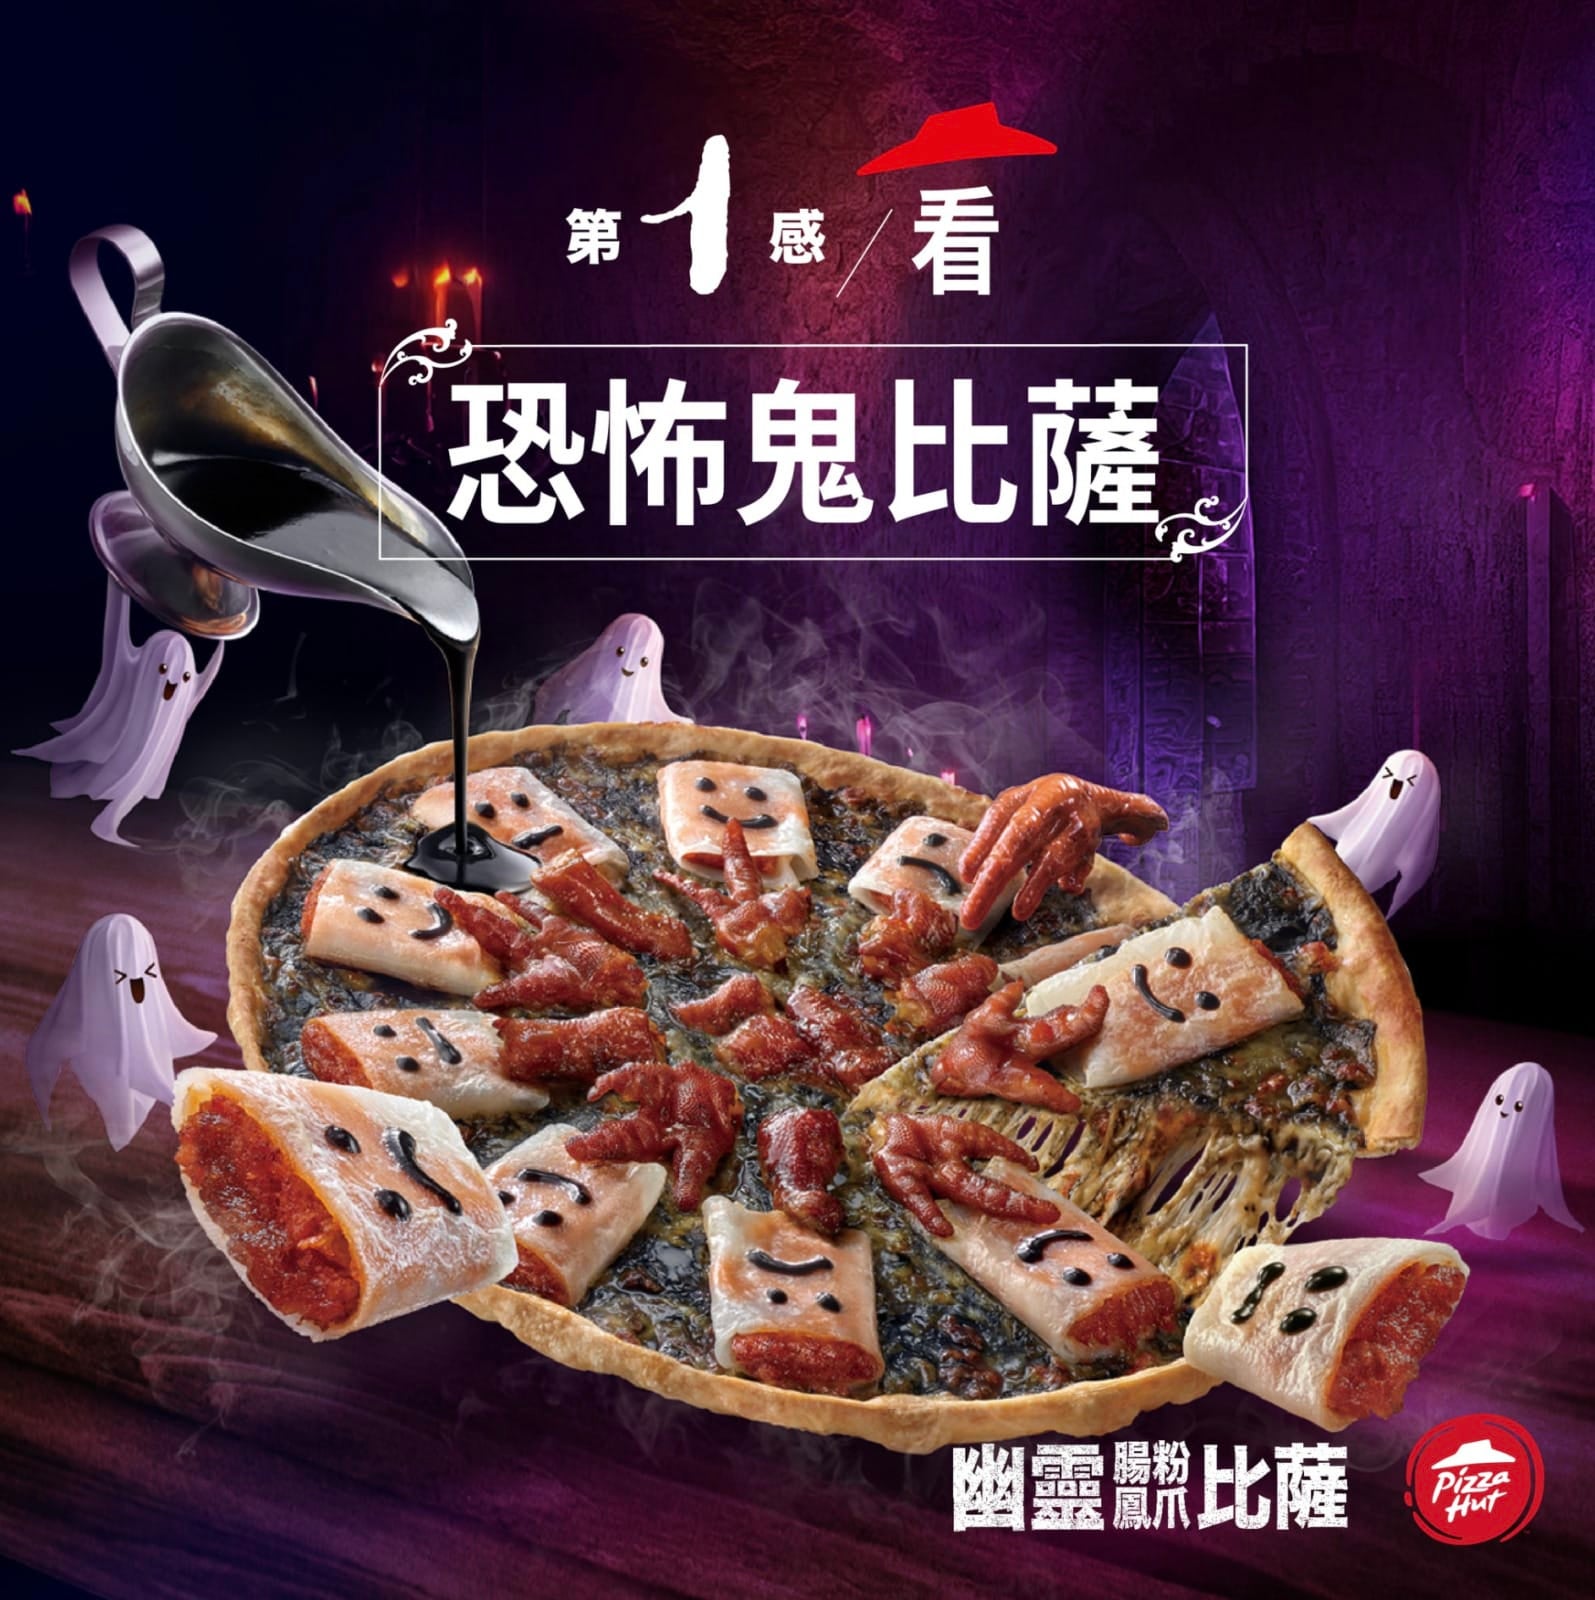 Pizza Hut ไต้หวัน ฮาโลวีน 2023 พิซซ่าหน้าตีนไก่ Ghost rice roll and chicken feet pizza